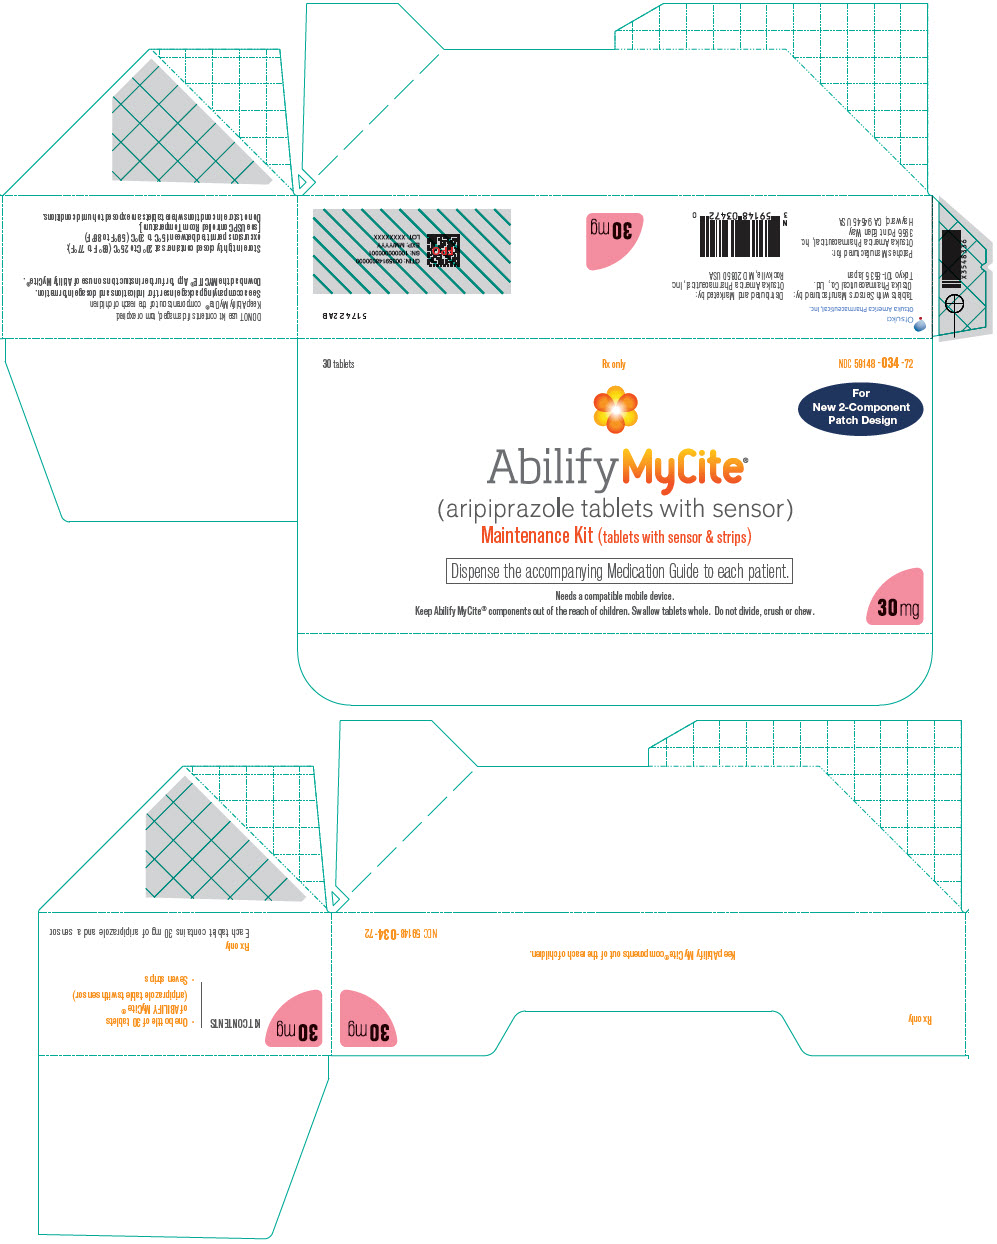 PRINCIPAL DISPLAY PANEL - Maintenance Kit Carton - 30 mg